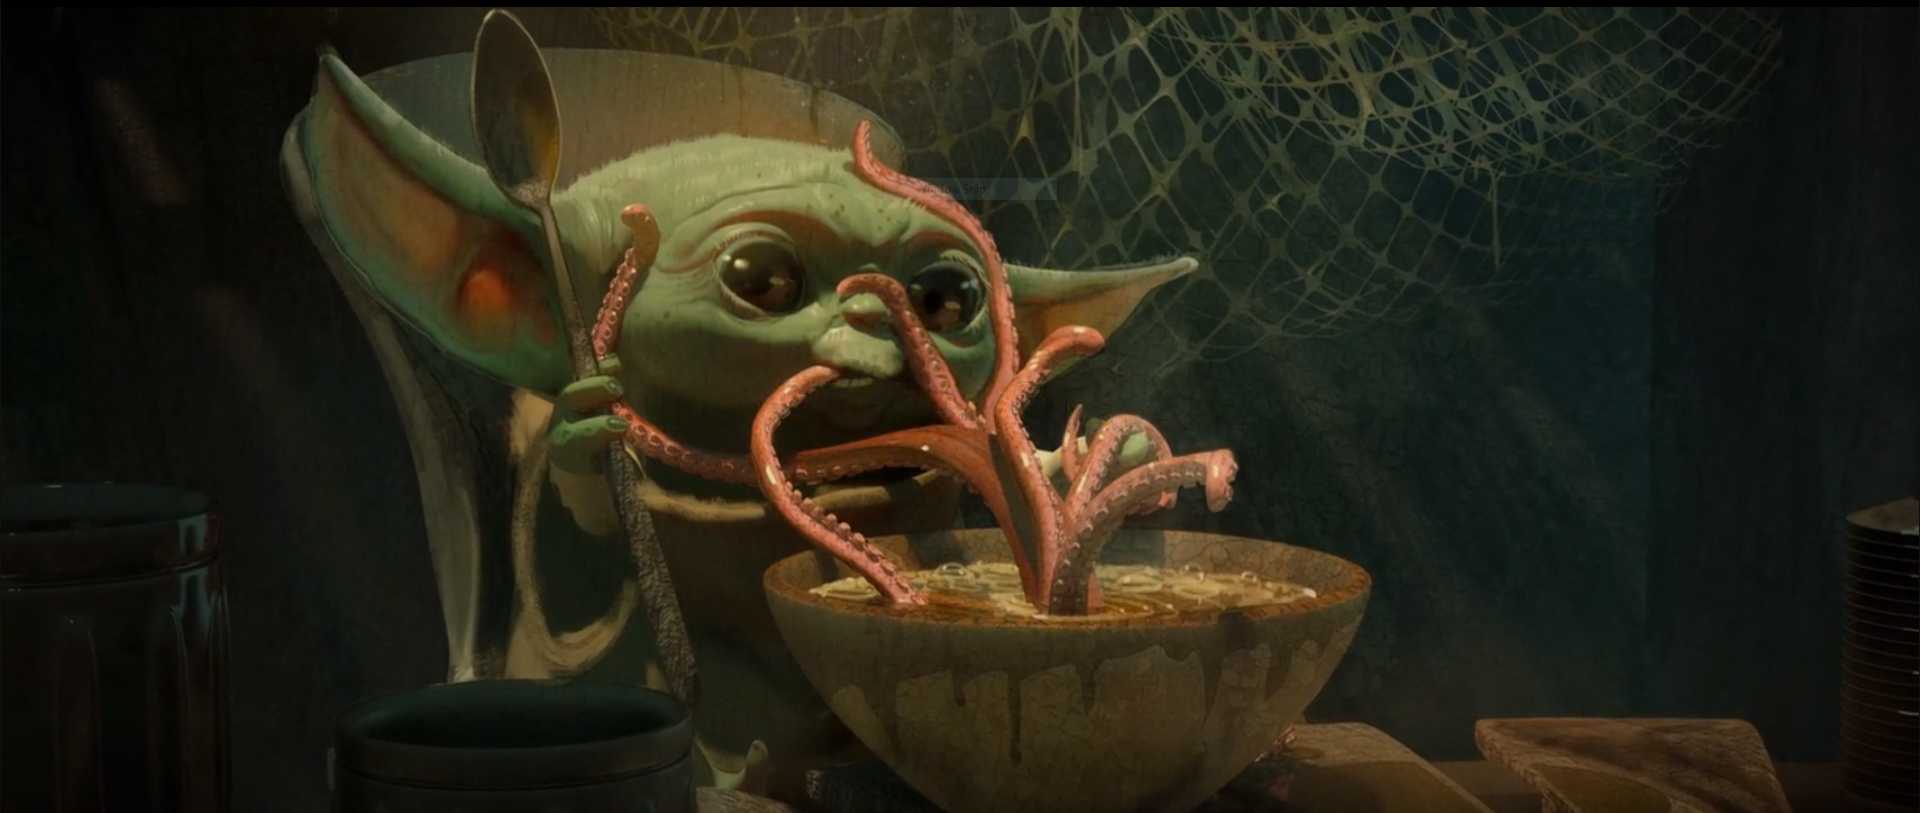 Star Wars Starwar The Mandalorian The Mandalorian Character Yoda Baby Yoda Disney Food Spoon 1920x813